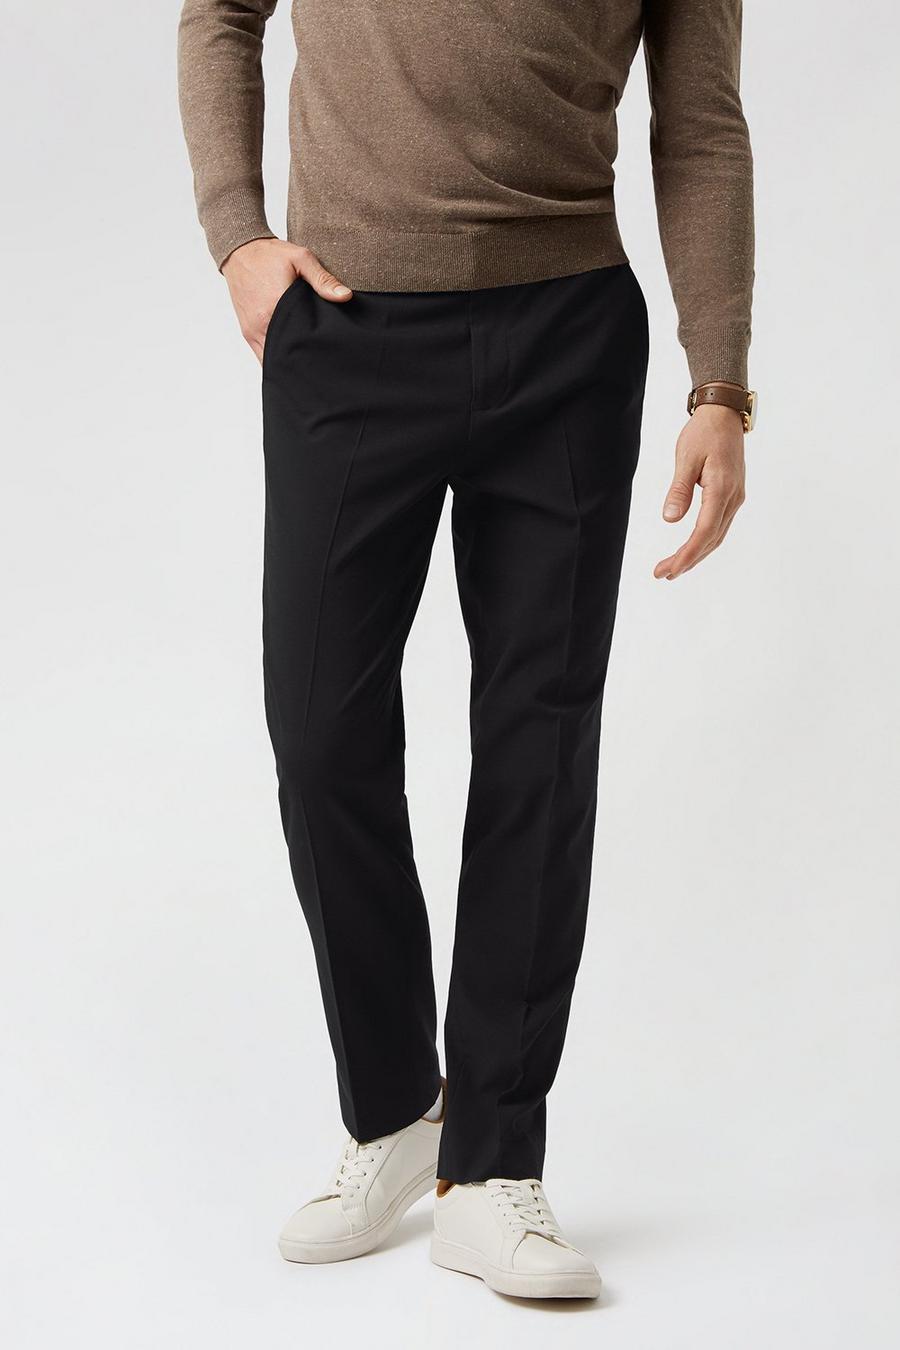 Slim Fit Black Essential Trouser